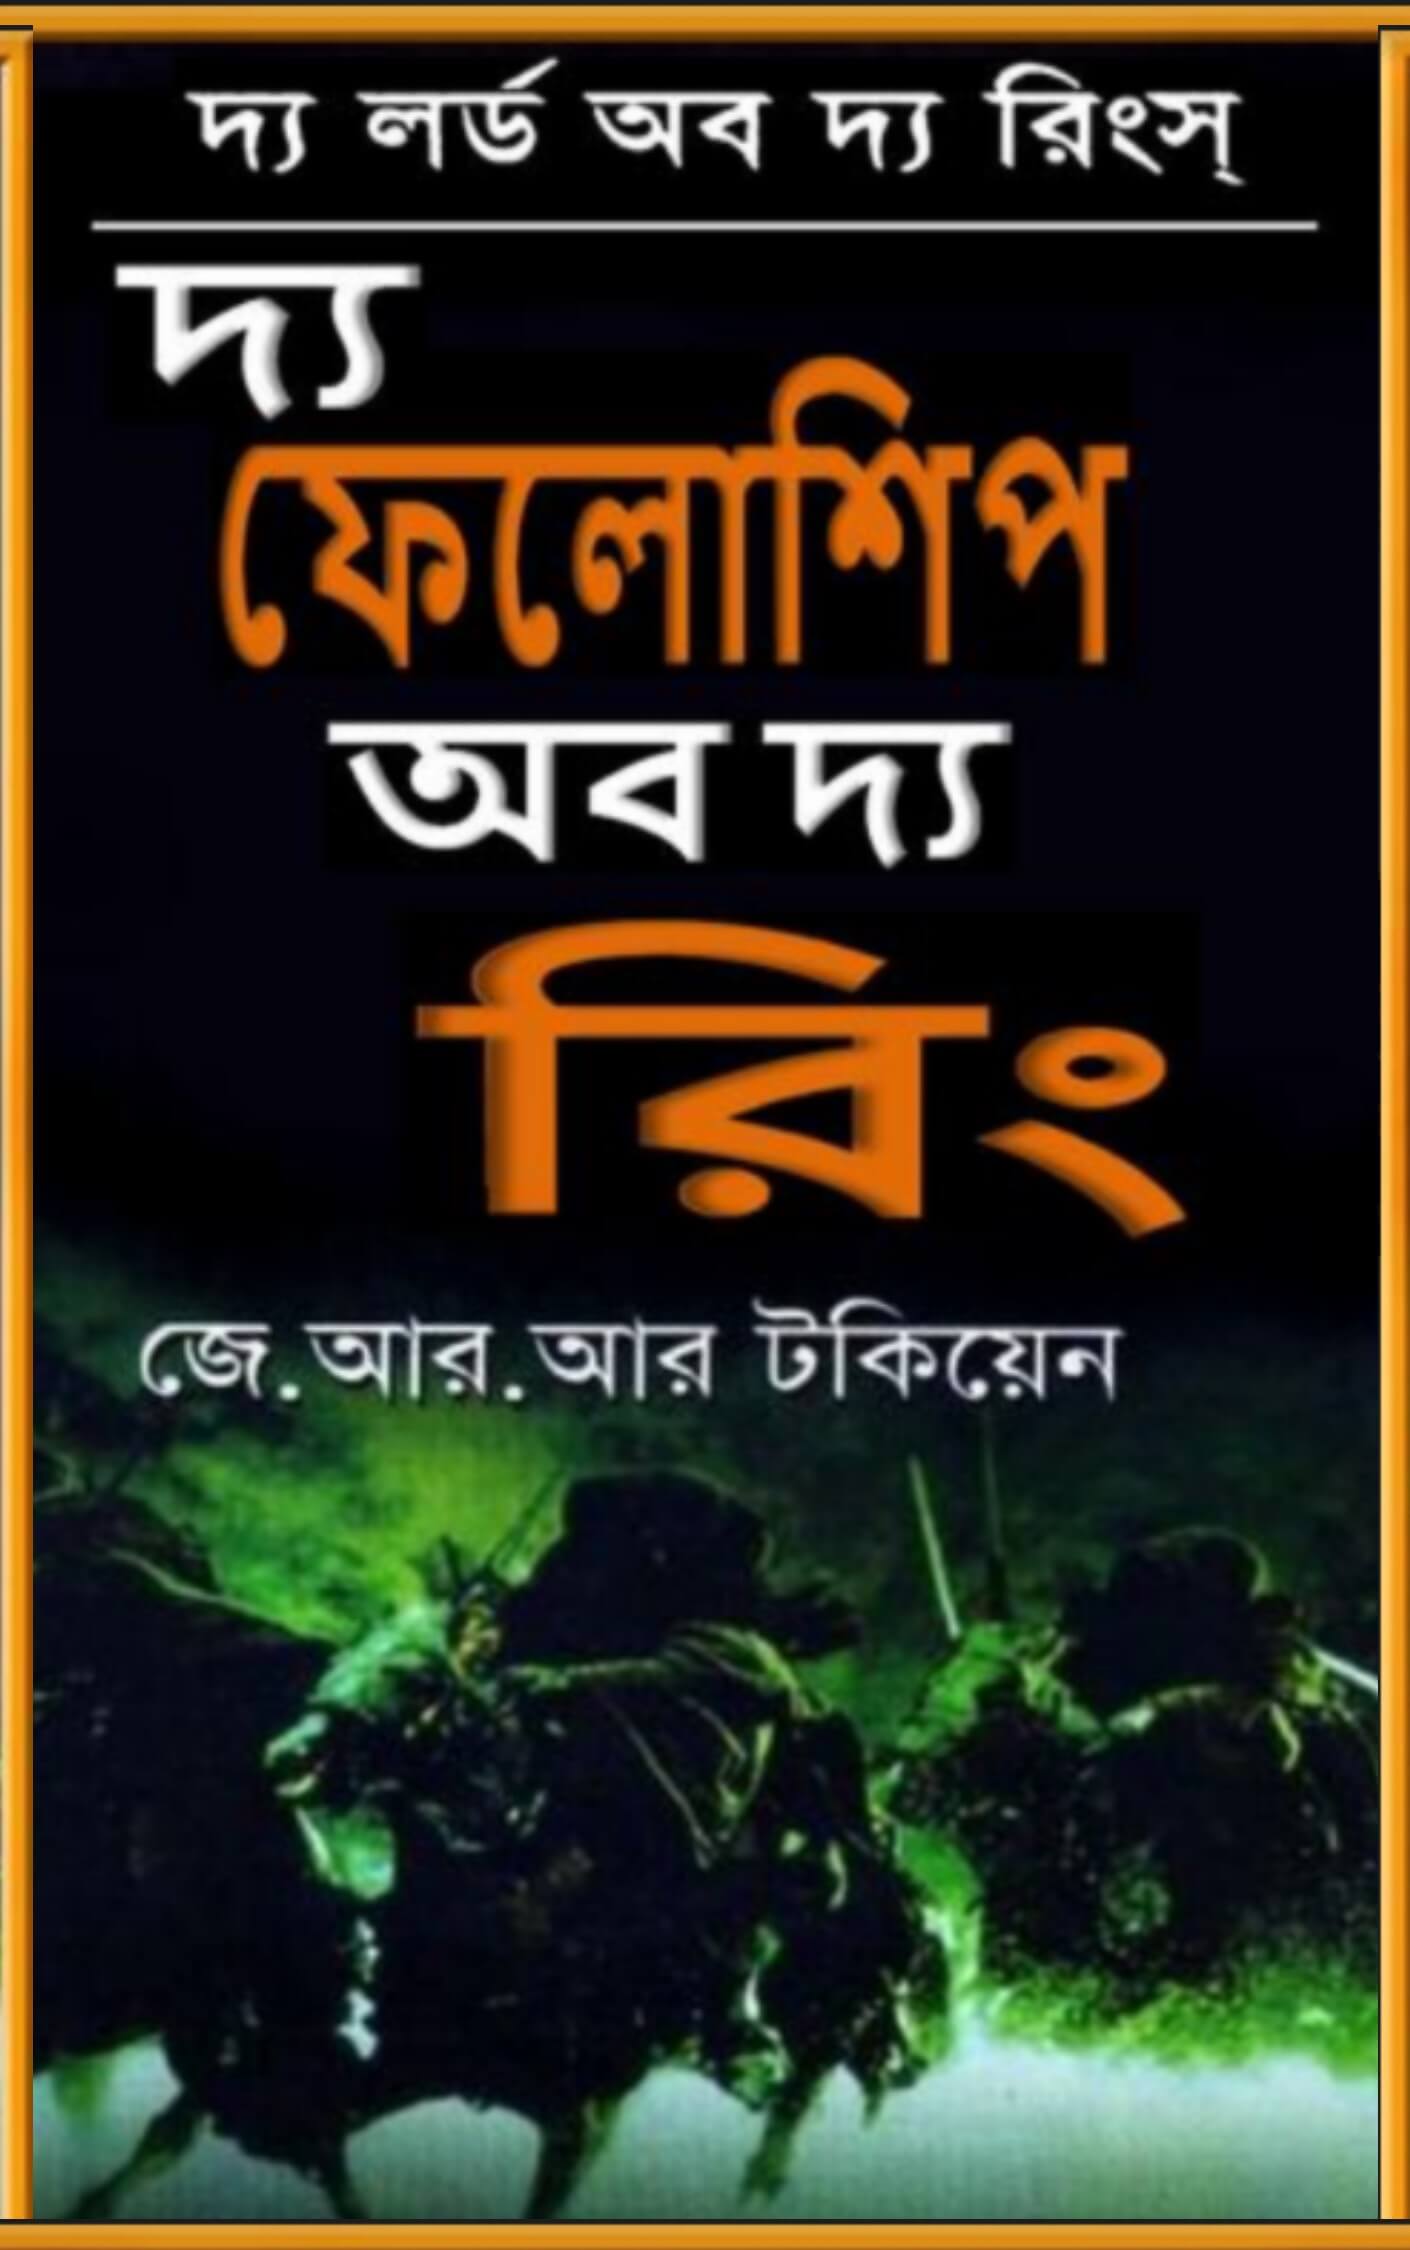 bengali books pdf free download